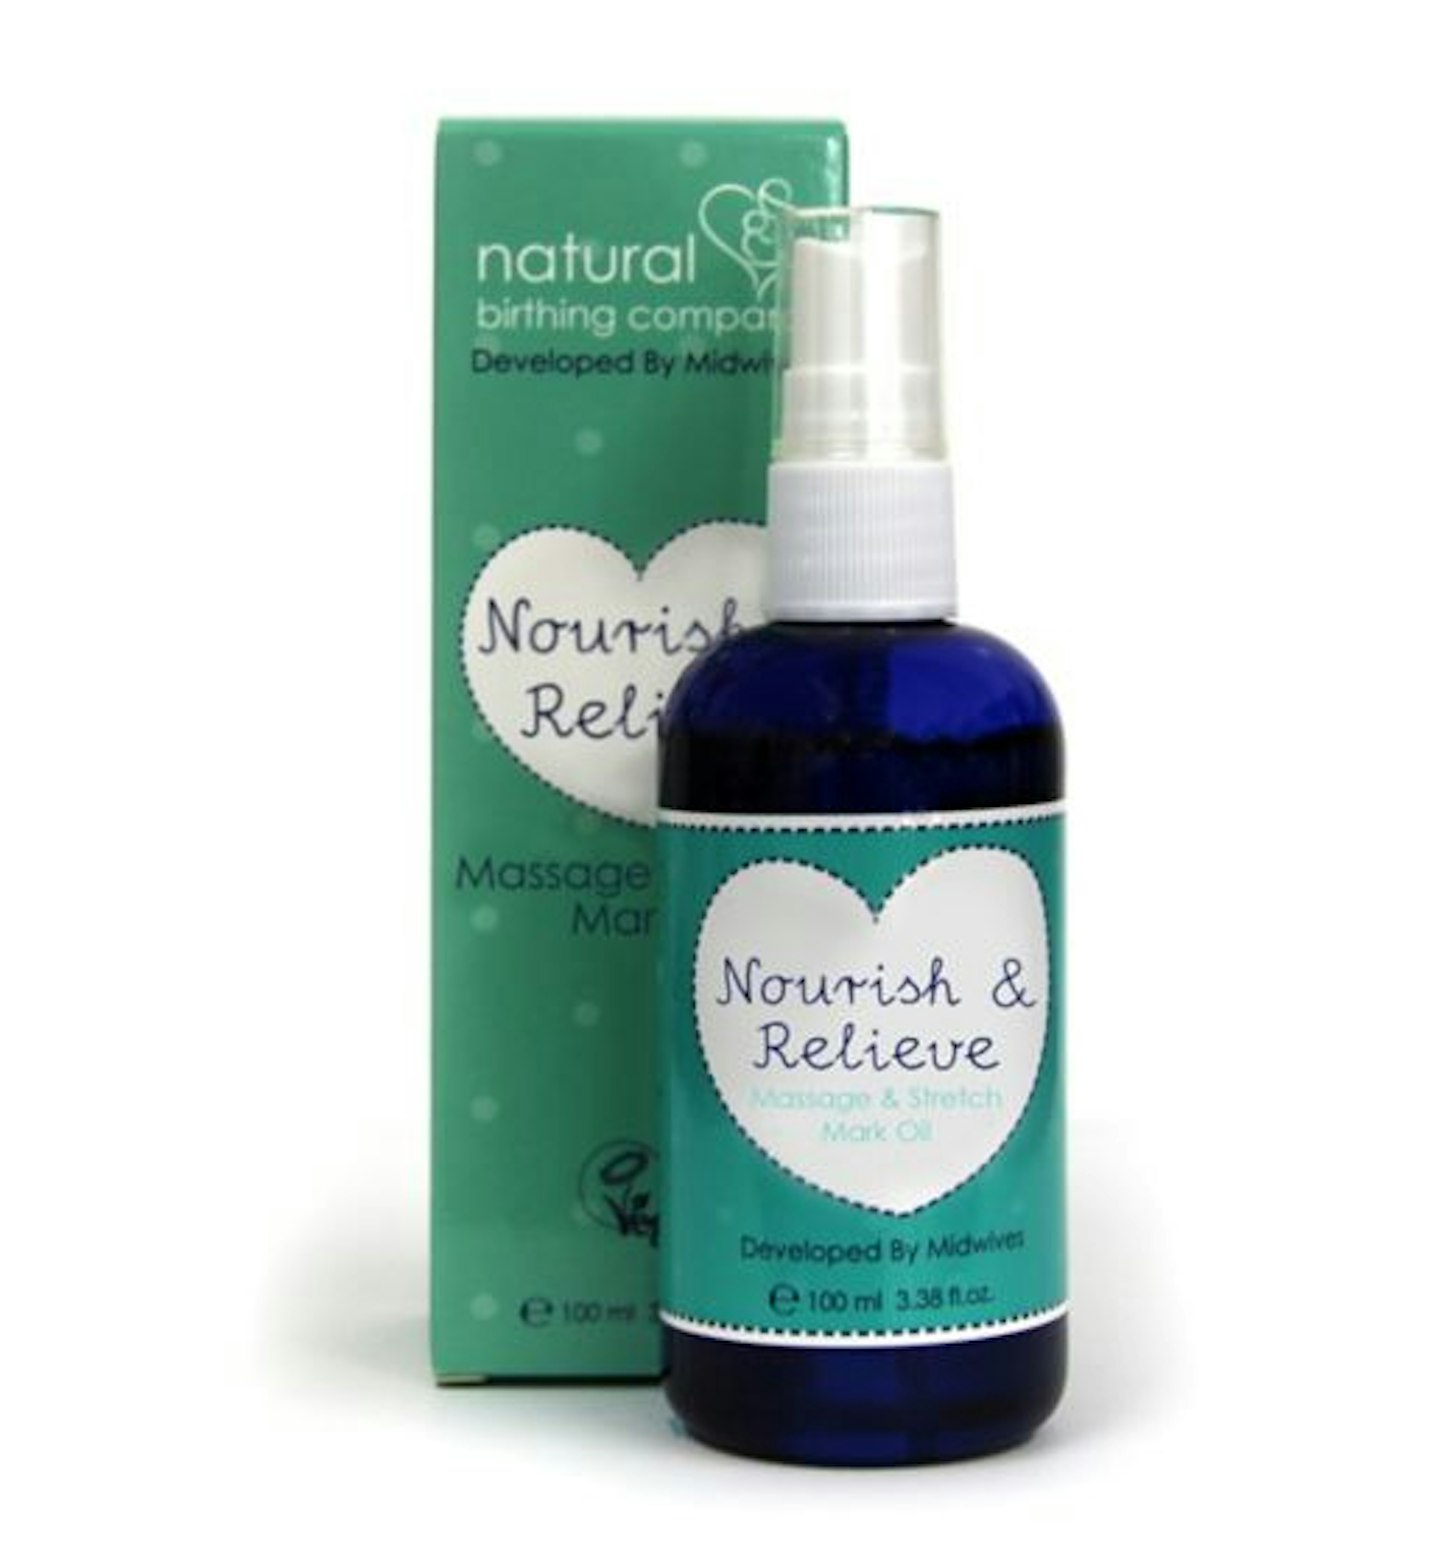 Nourish & Relieve Massage and Stretch Mark Oil